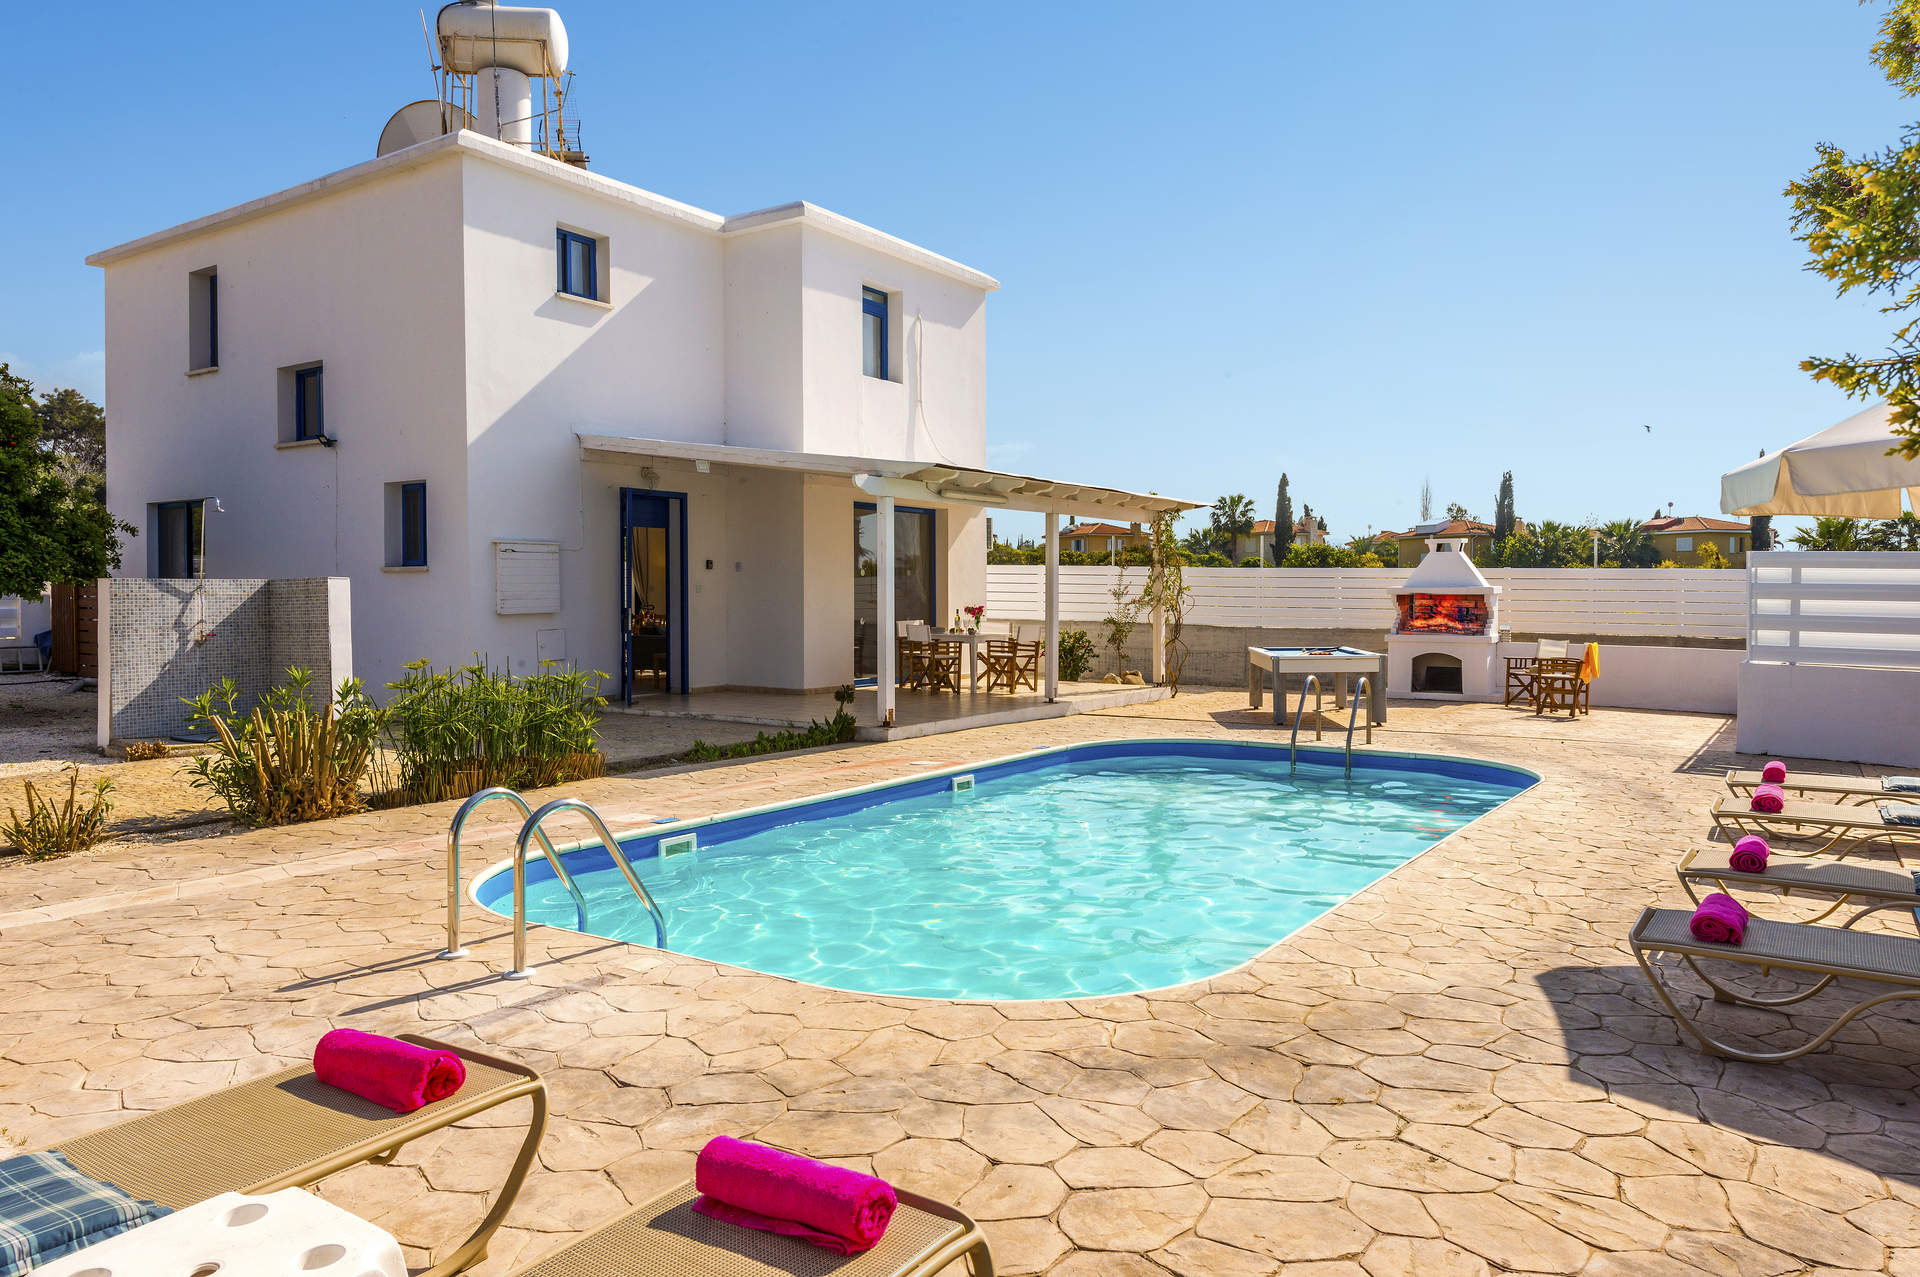 Villas in polis cyprus to rent